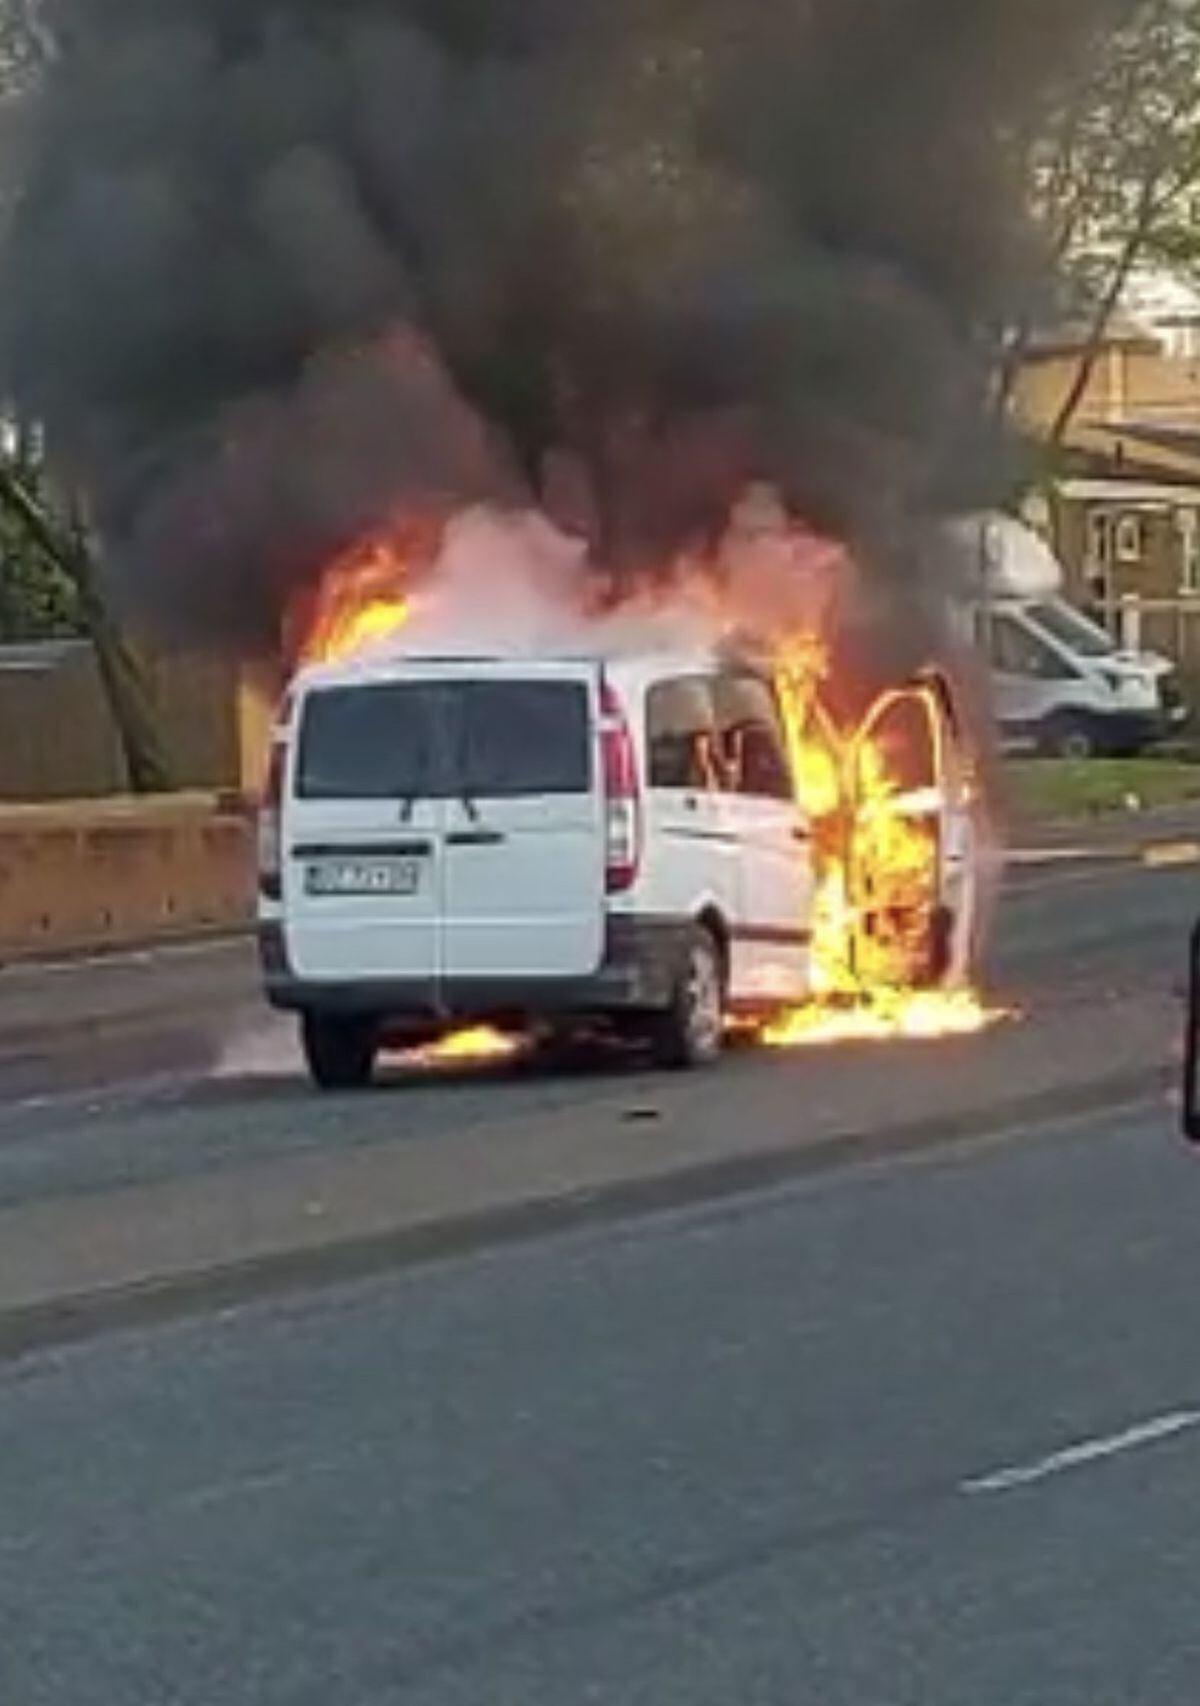 The van on fire on Friday evening in Oldbury. Photo: Dean Dandy